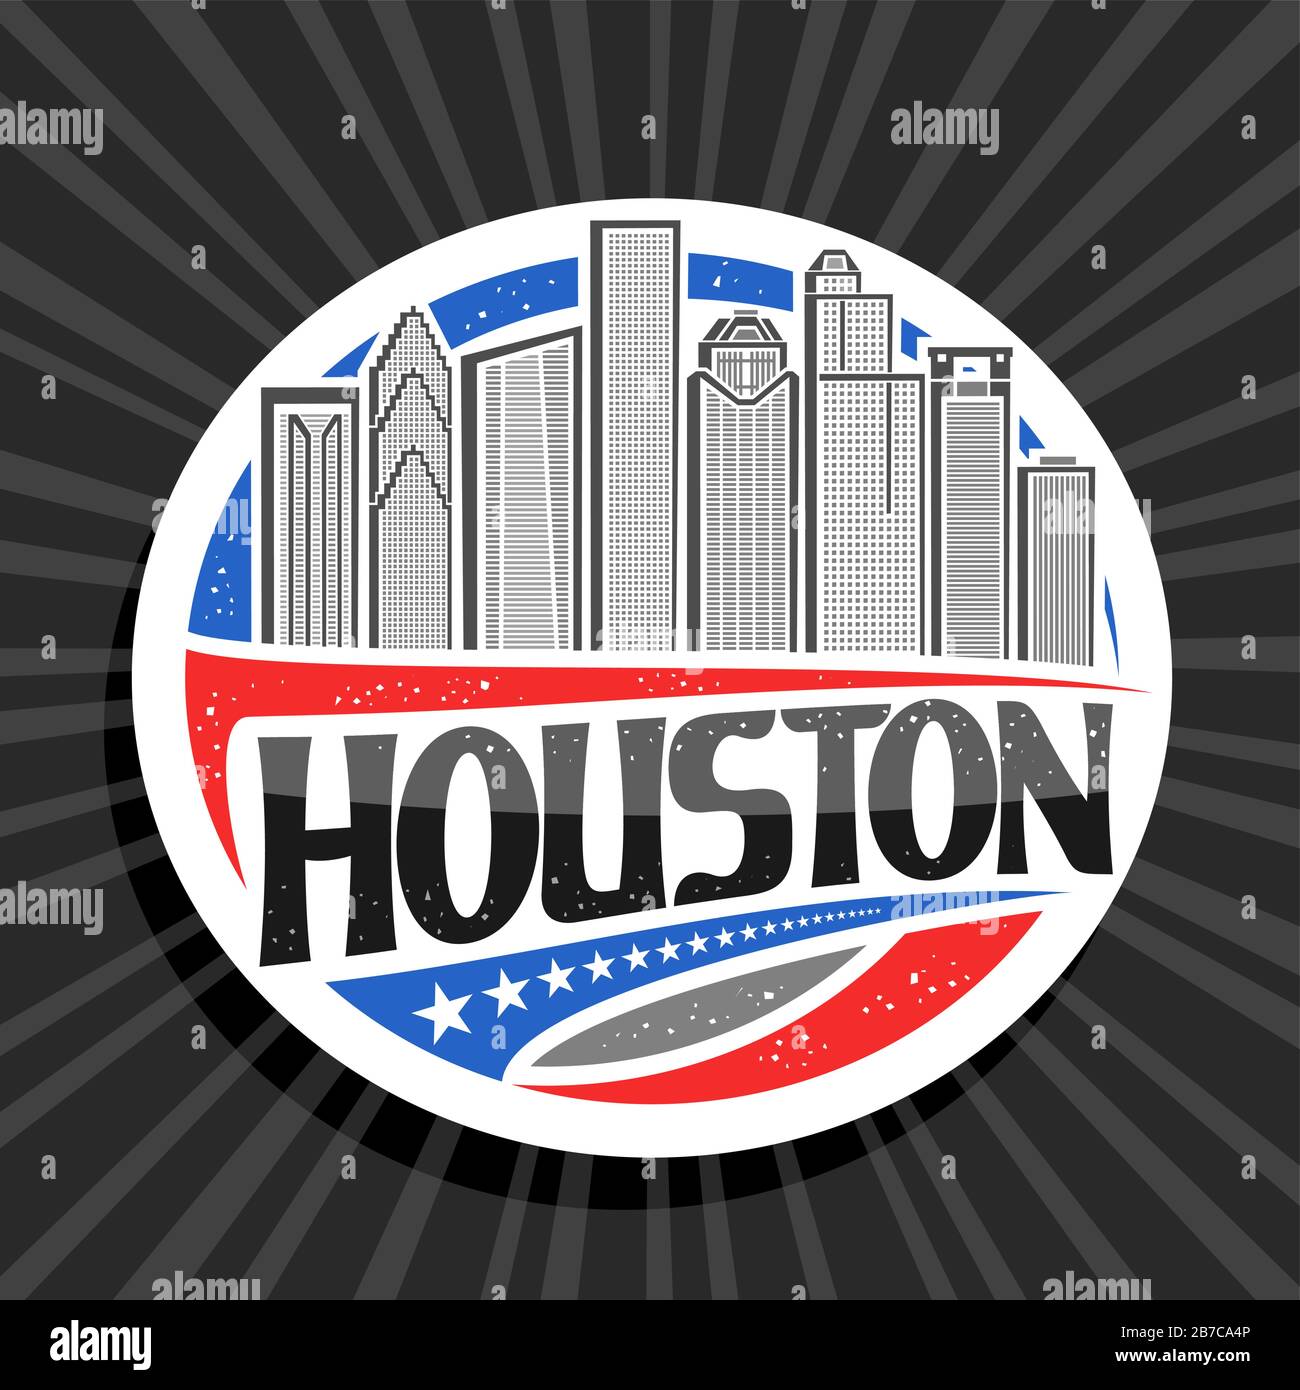 Houston Texas City Sky View Day Souvenir Fridge Magnet 